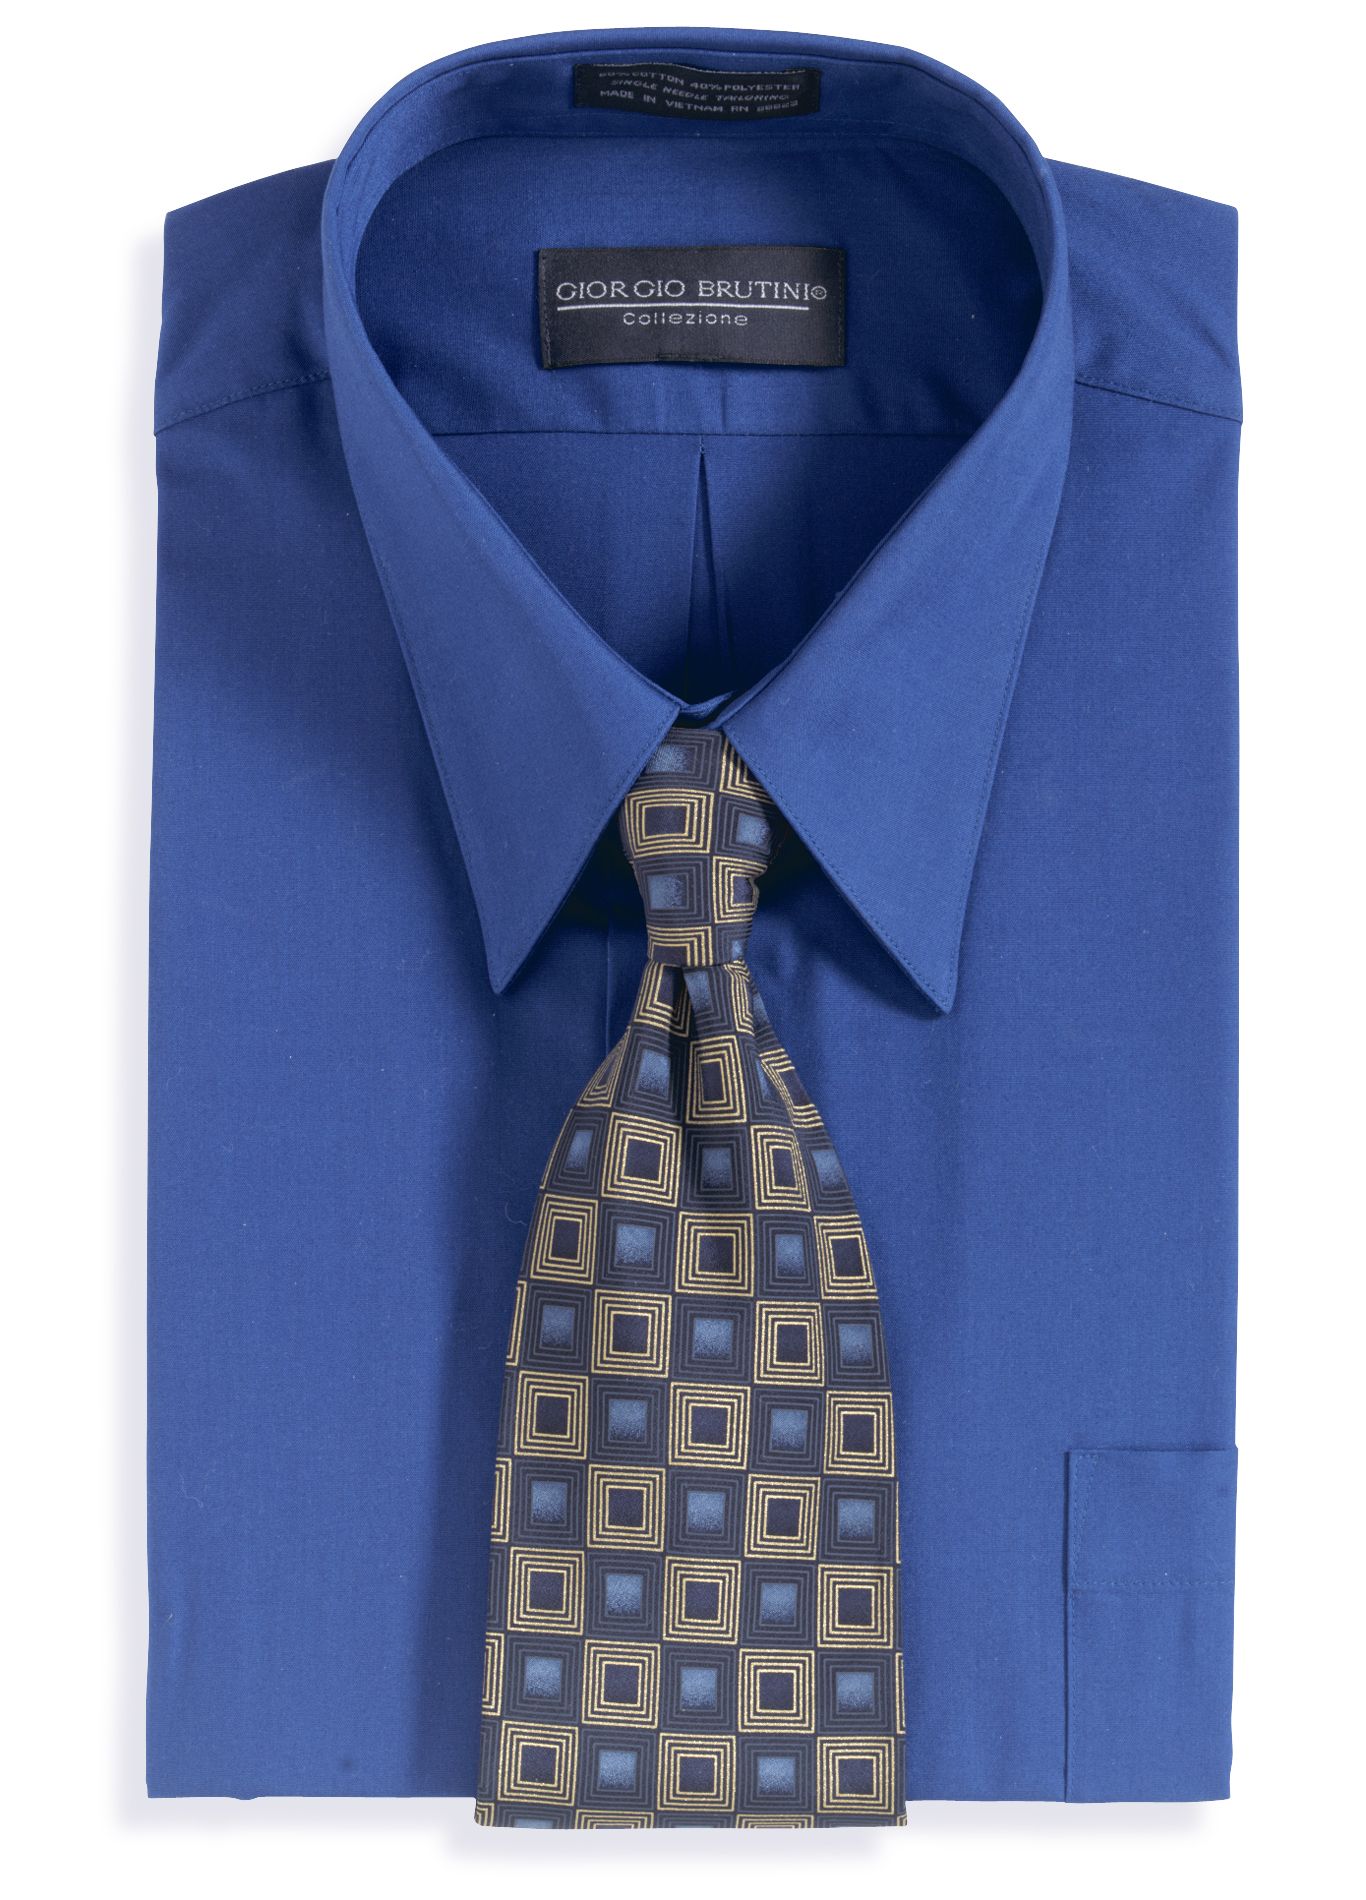 Giorgio Brutini Boxed Dress Shirt and Tie Set